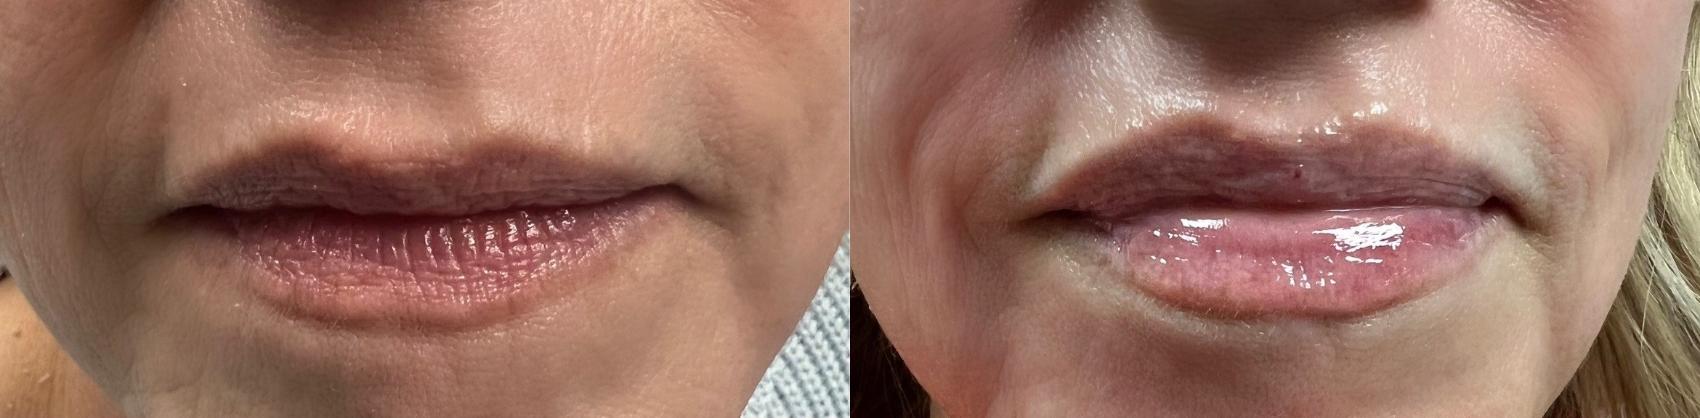 Facial Filler Case 79 Before & After Front | Downers Grove, IL | Dr. Sandeep Jejurikar